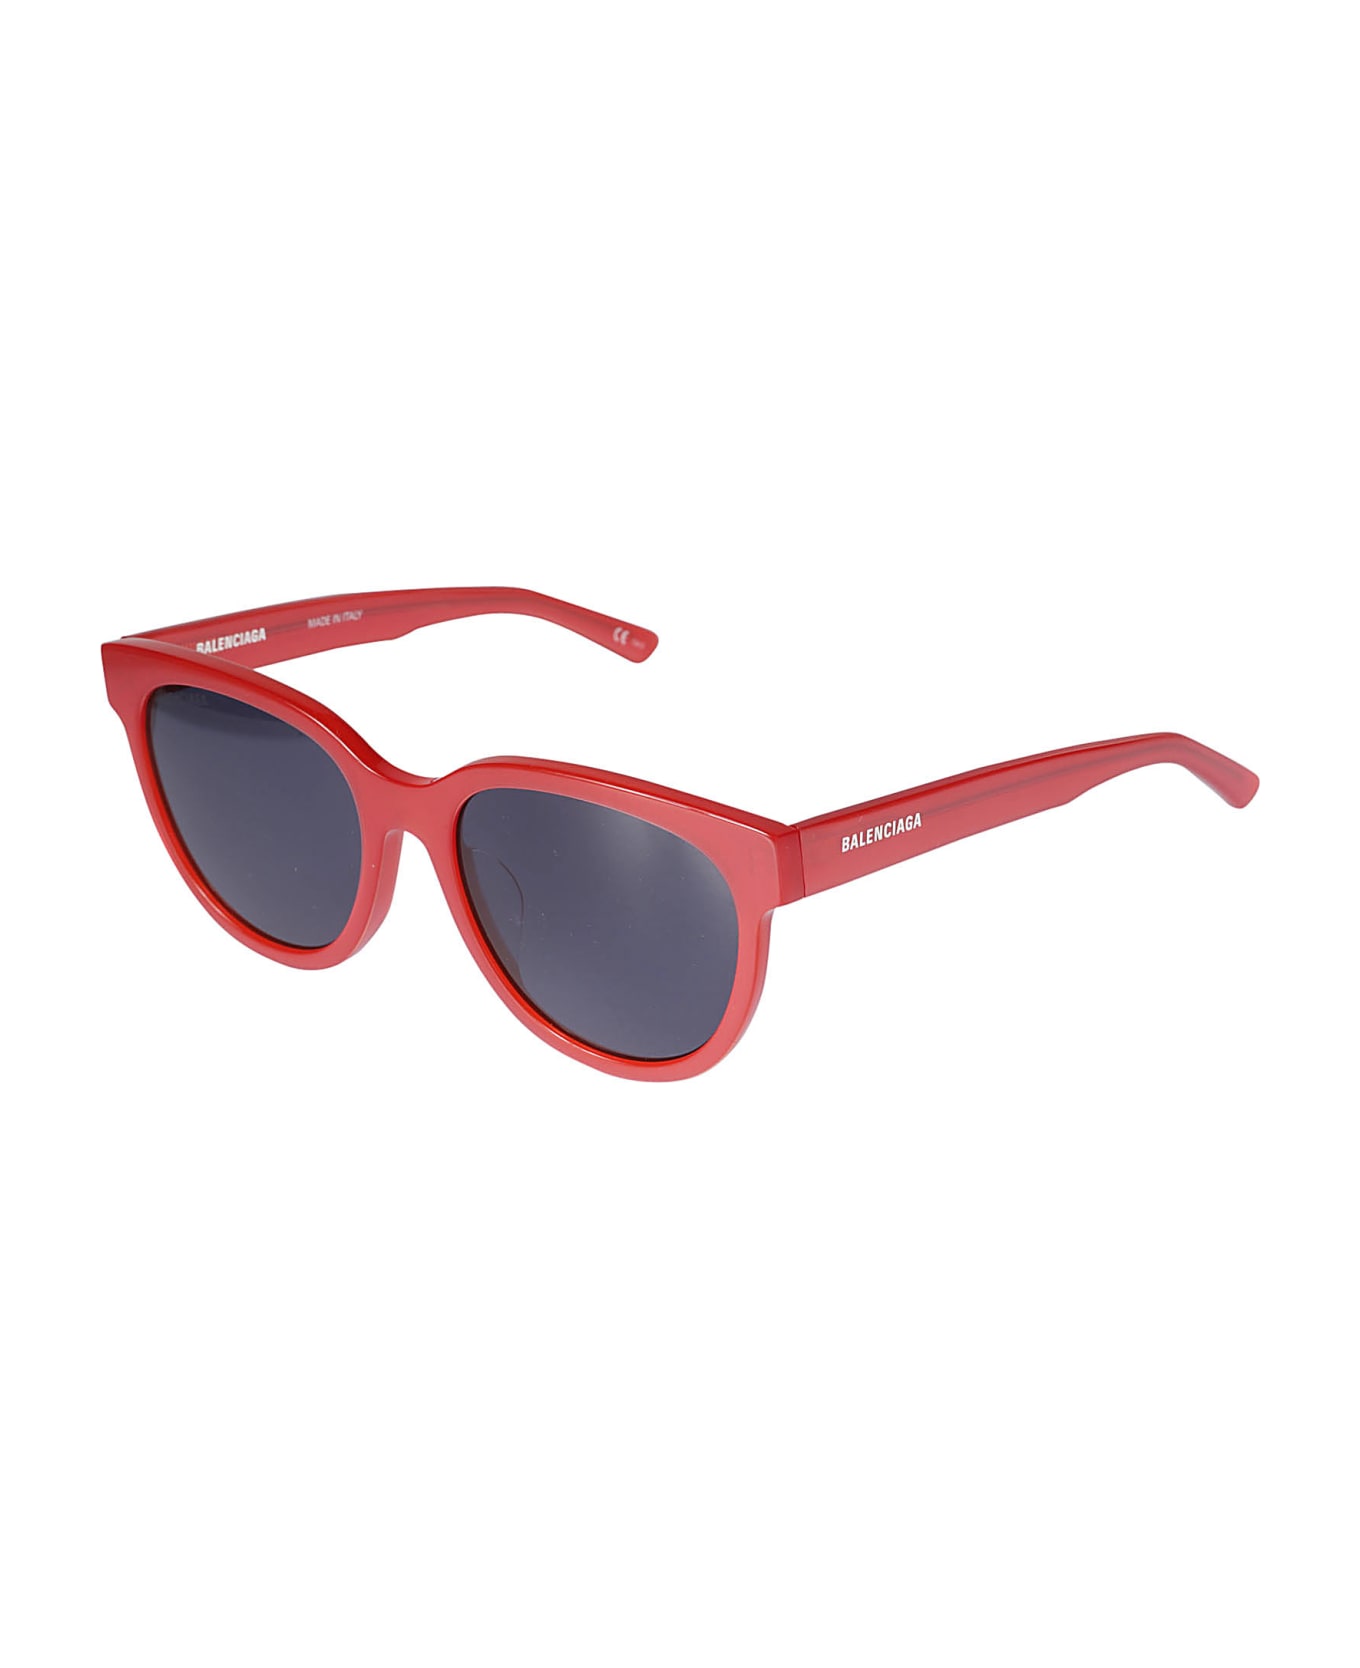 Balenciaga Eyewear Everyday Sunglasses - 003 red red blue